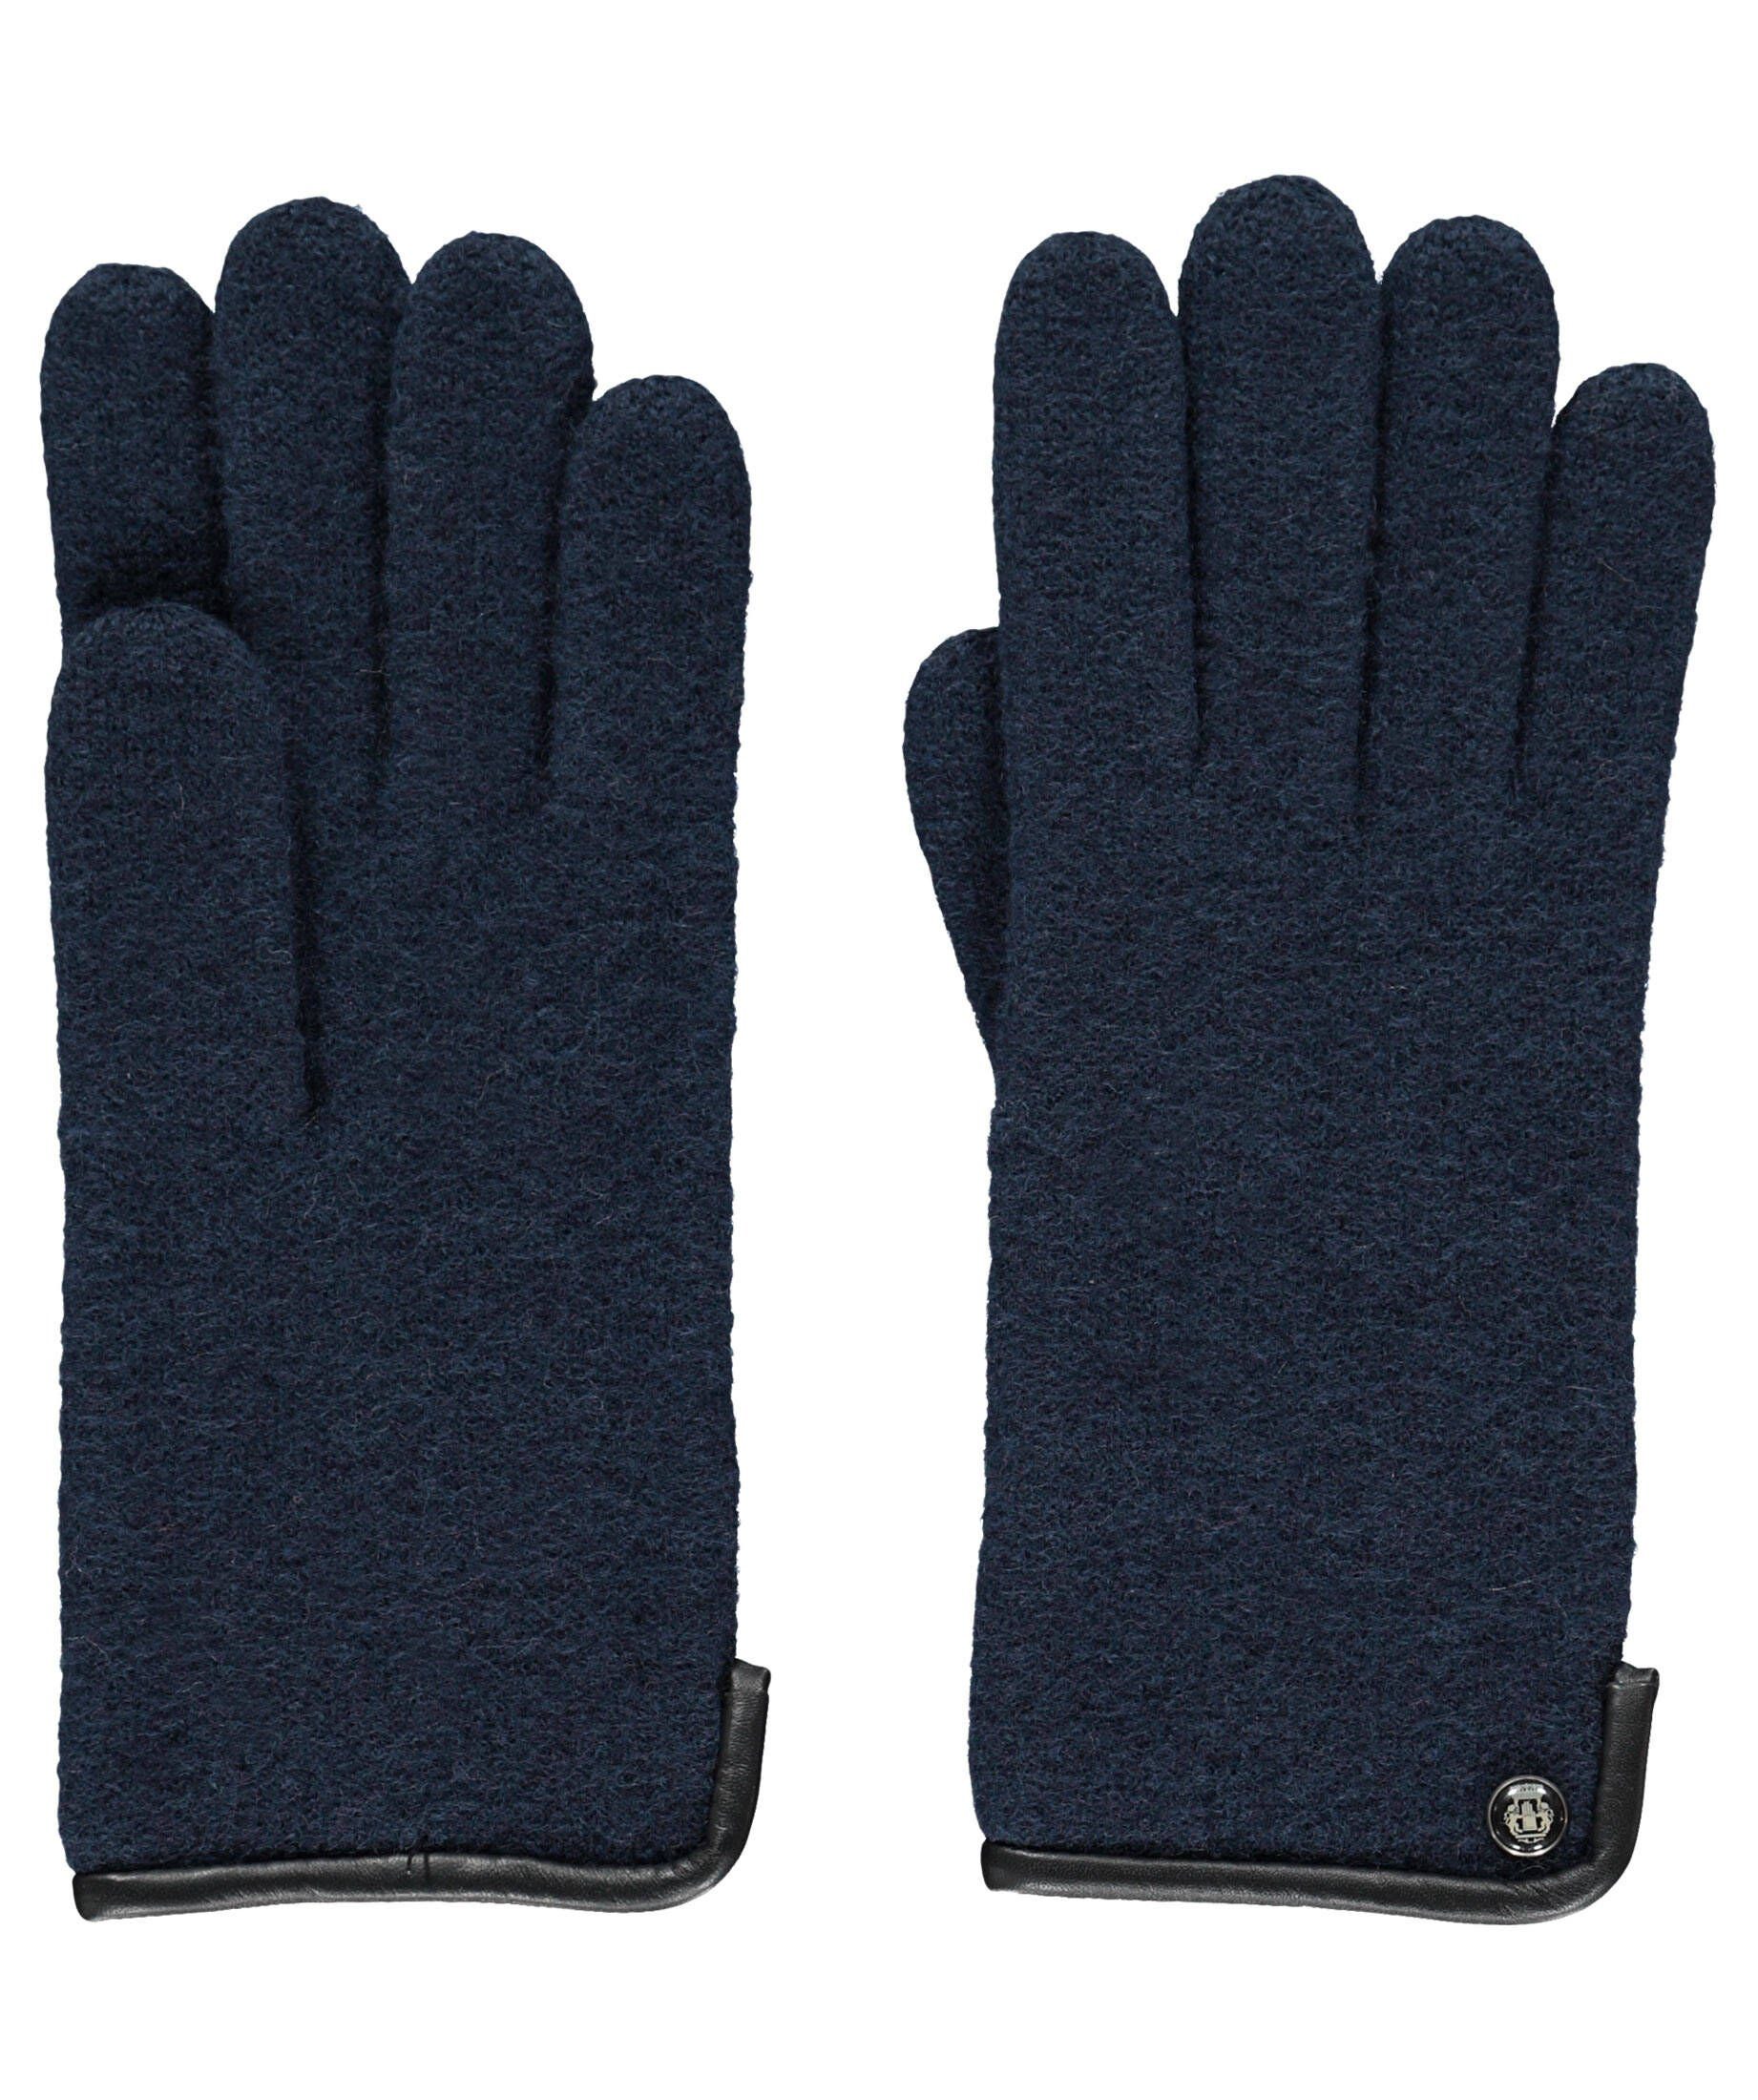 Roeckl SPORTS Laufhandschuhe Damen Handschuhe marine (52)